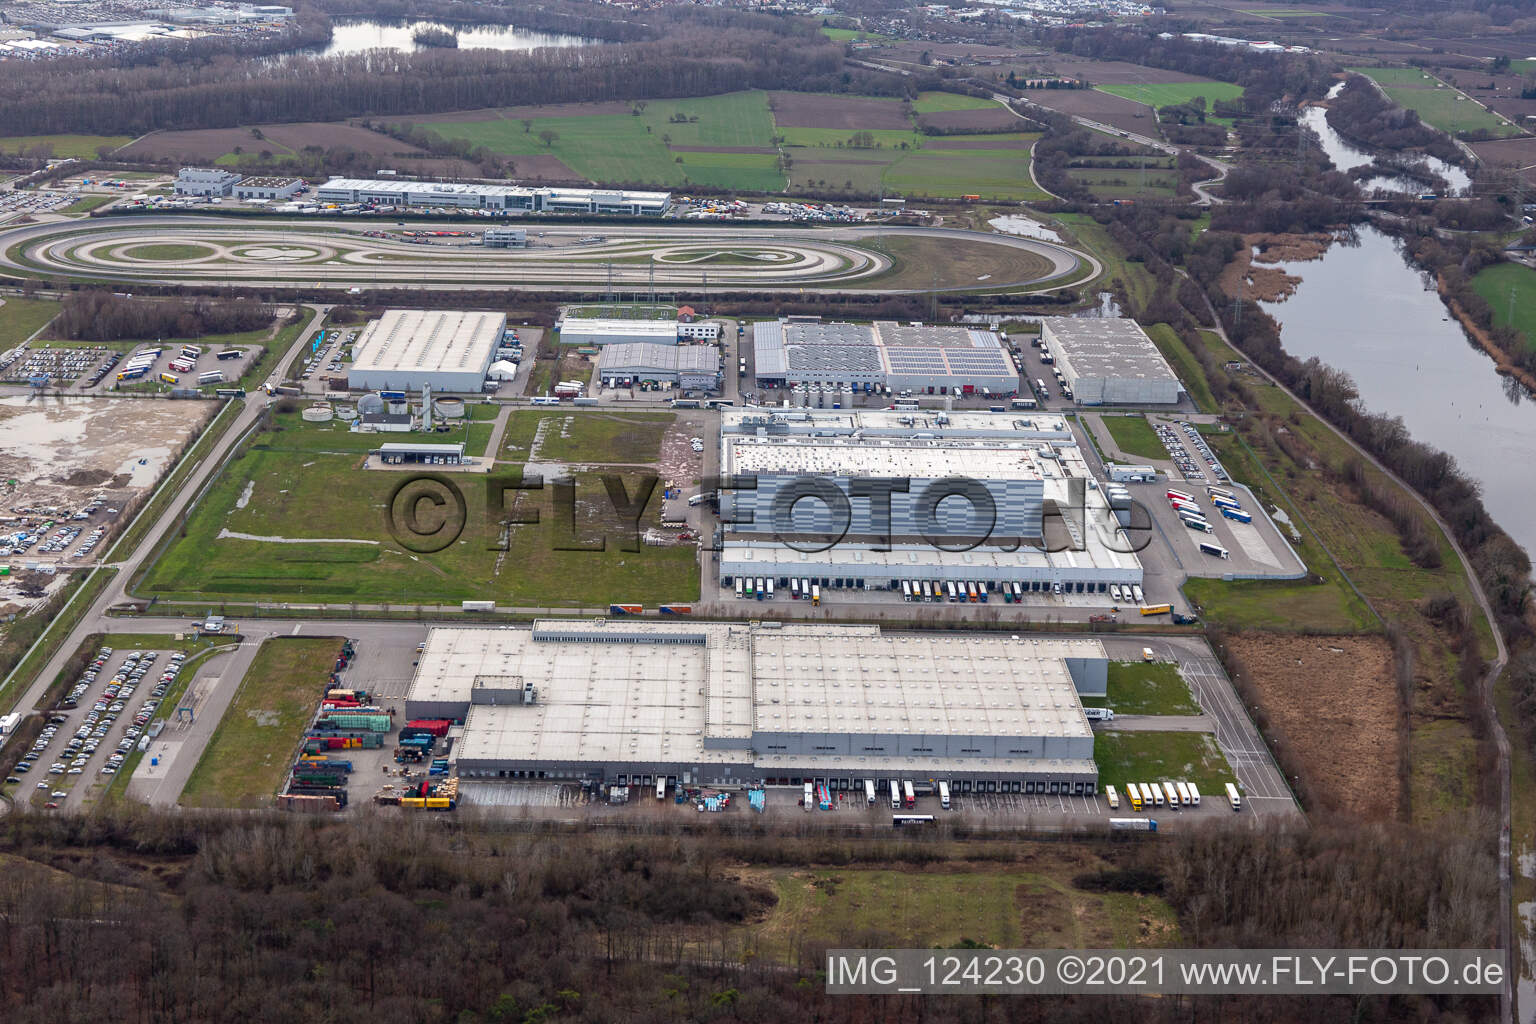 Oberwald industrial area in Jockgrim in the state Rhineland-Palatinate, Germany